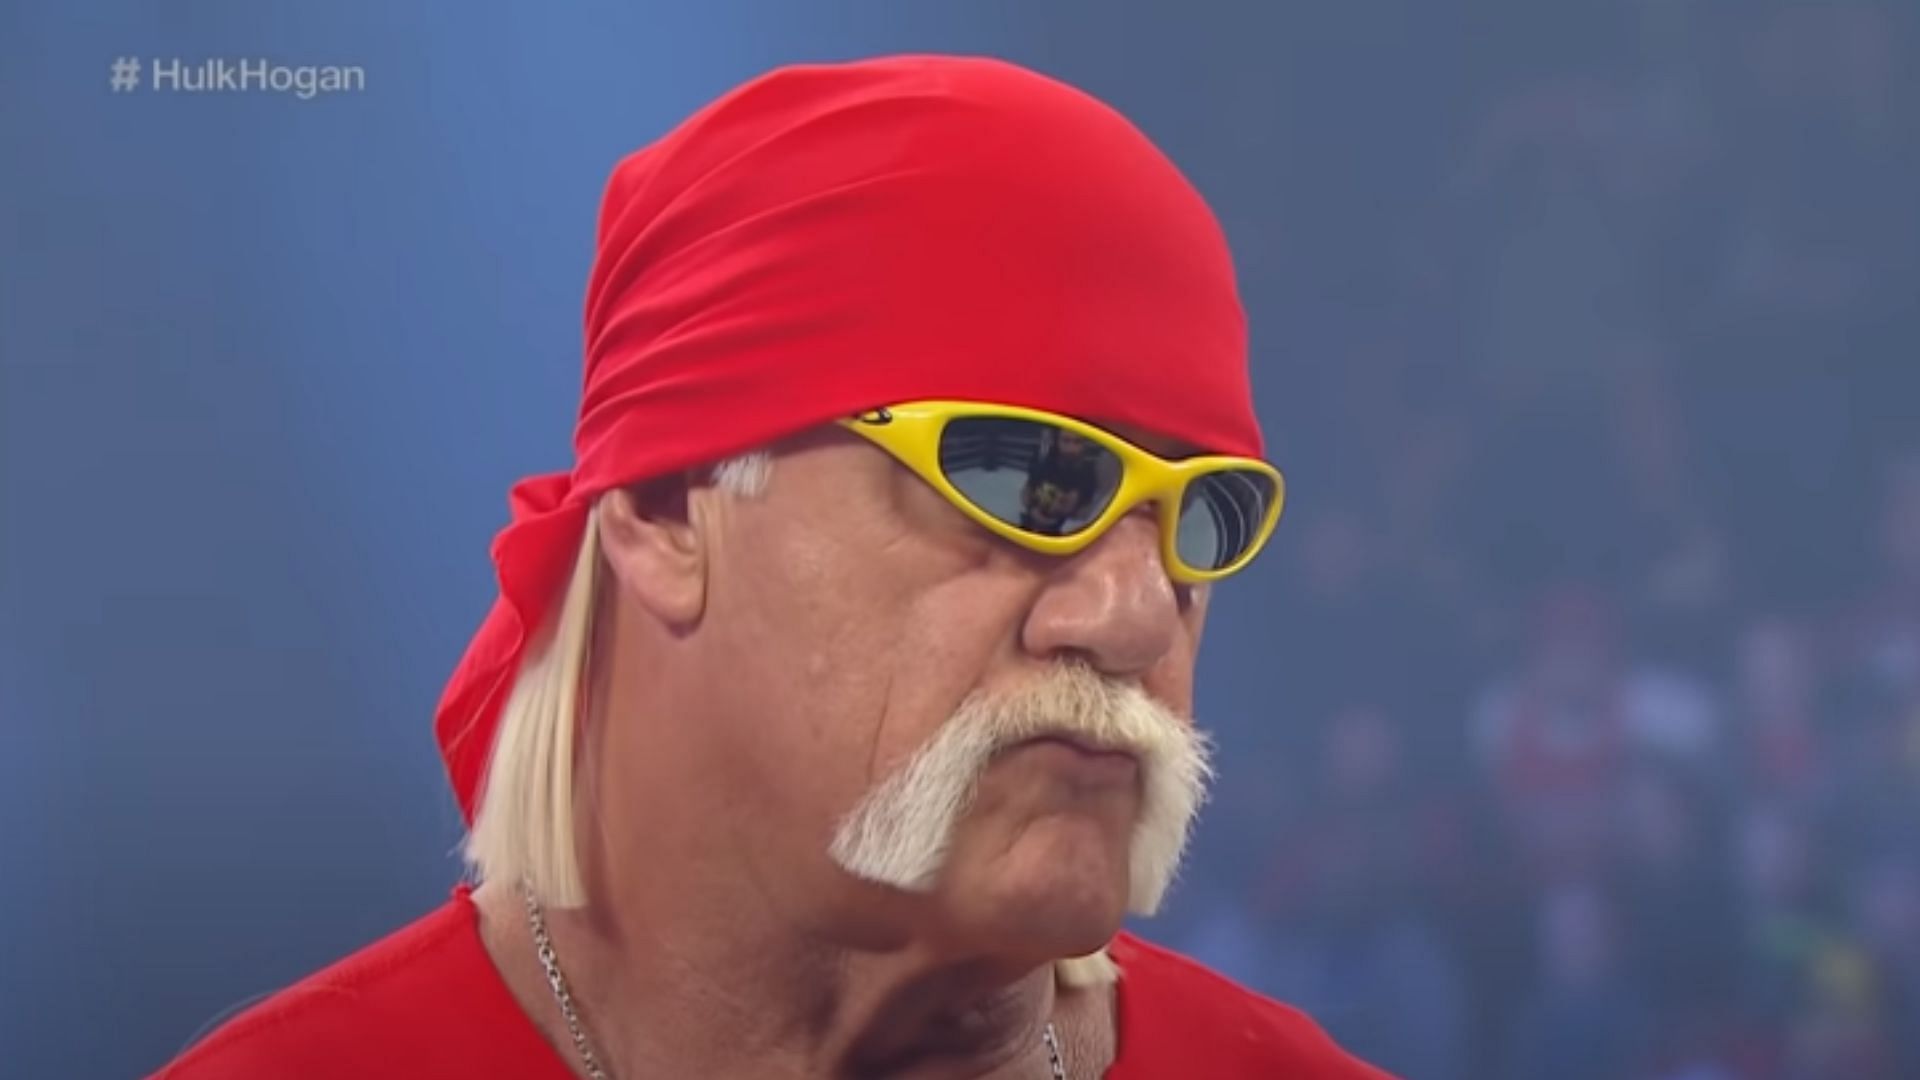 Hulk Hogan is one of wrestling&#039;s biggest names